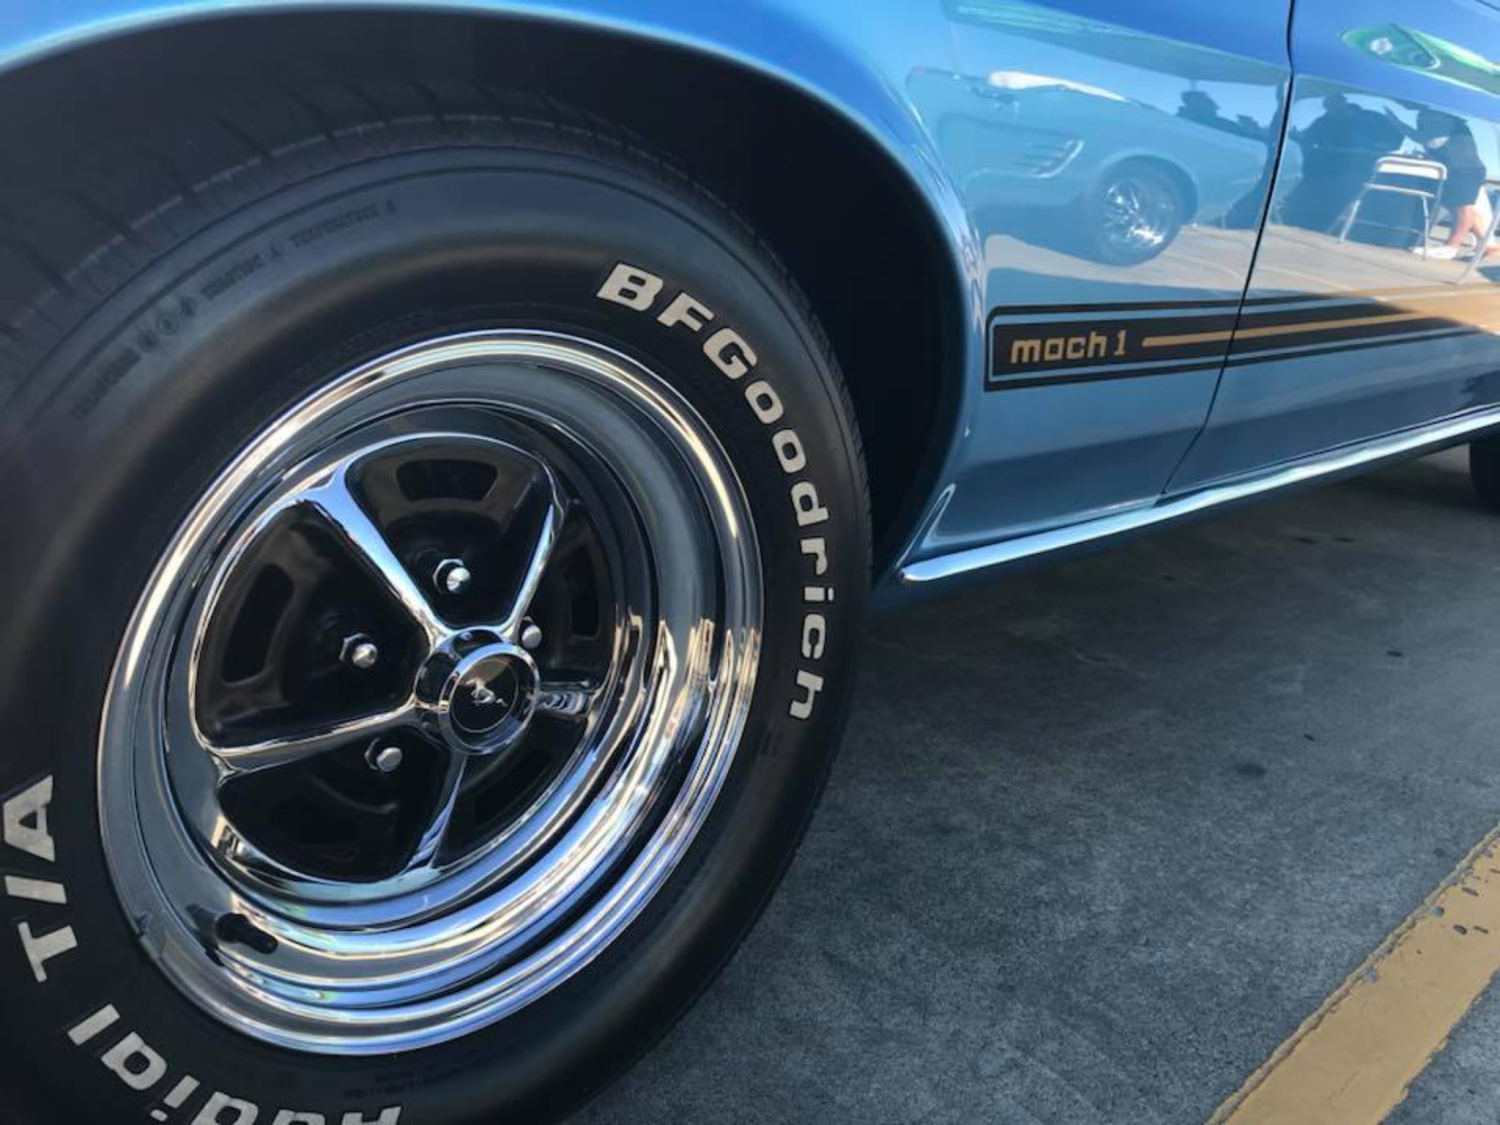 1969 Ford Mustang Mach 1 - boss69hogg - Shannons Club